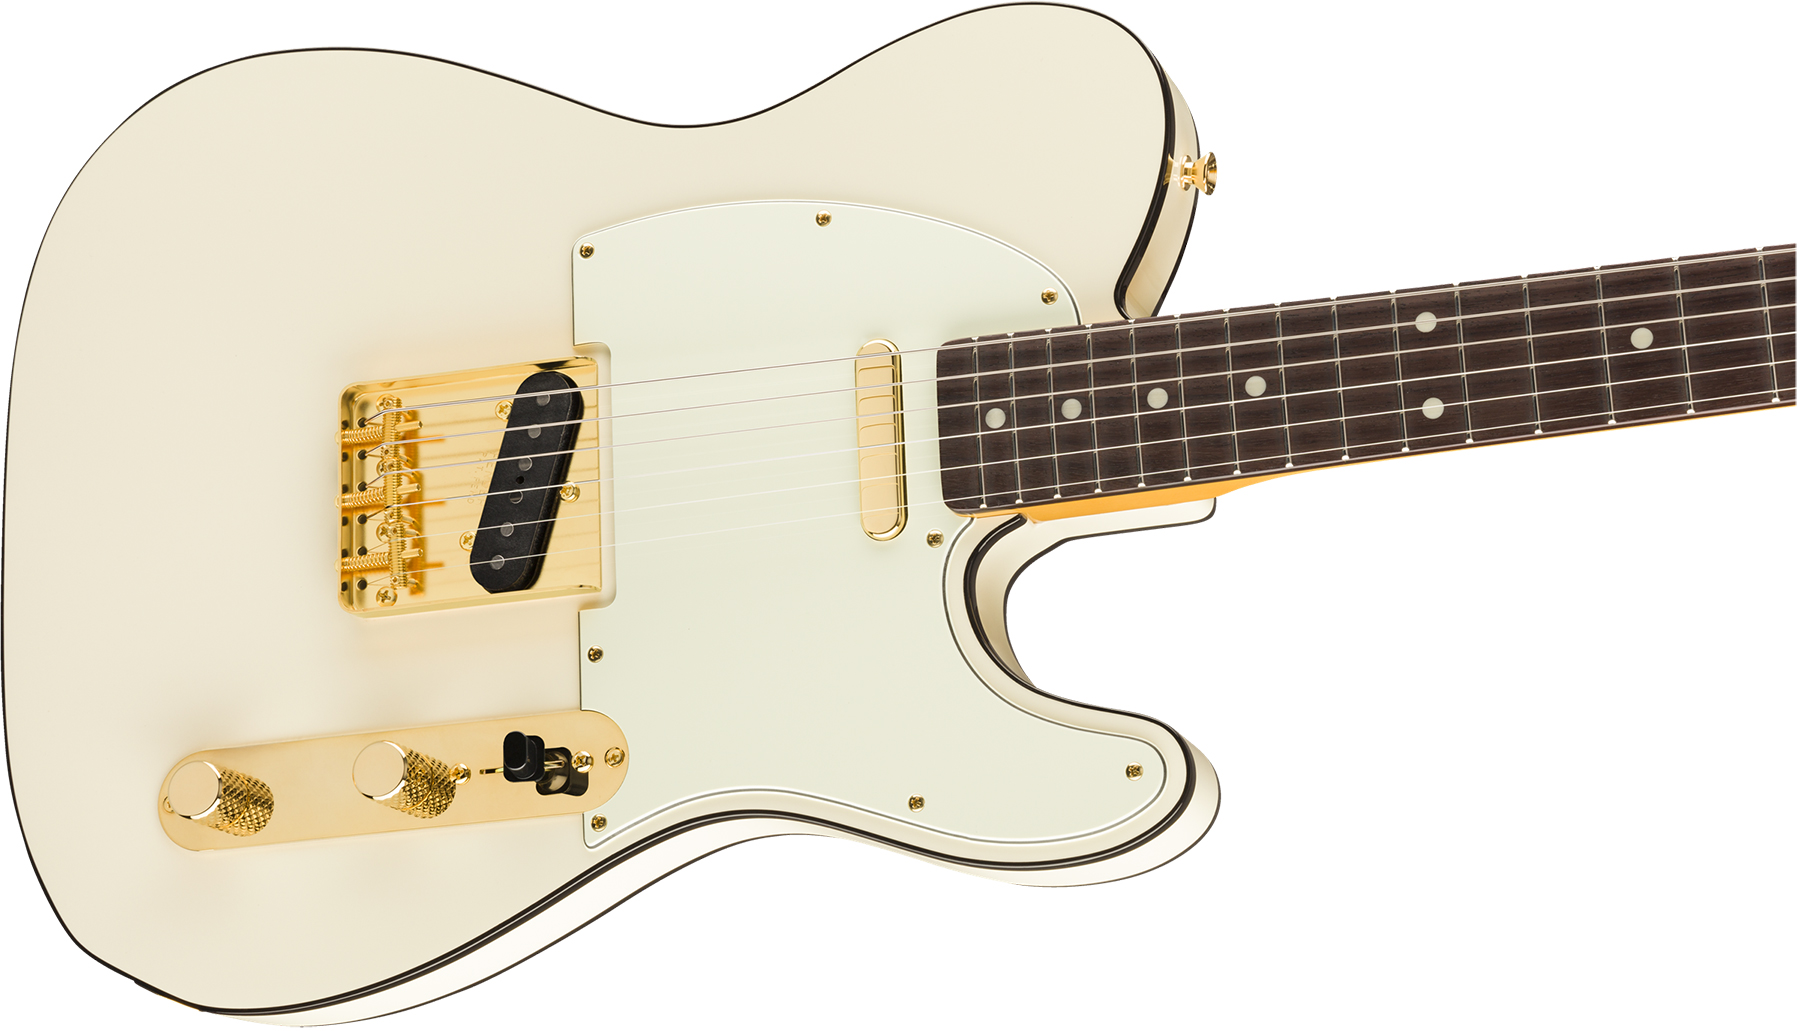 Fender Tele Daybreak Ltd 2019 Japon Gh Rw - Olympic White - Guitarra eléctrica con forma de tel - Variation 2